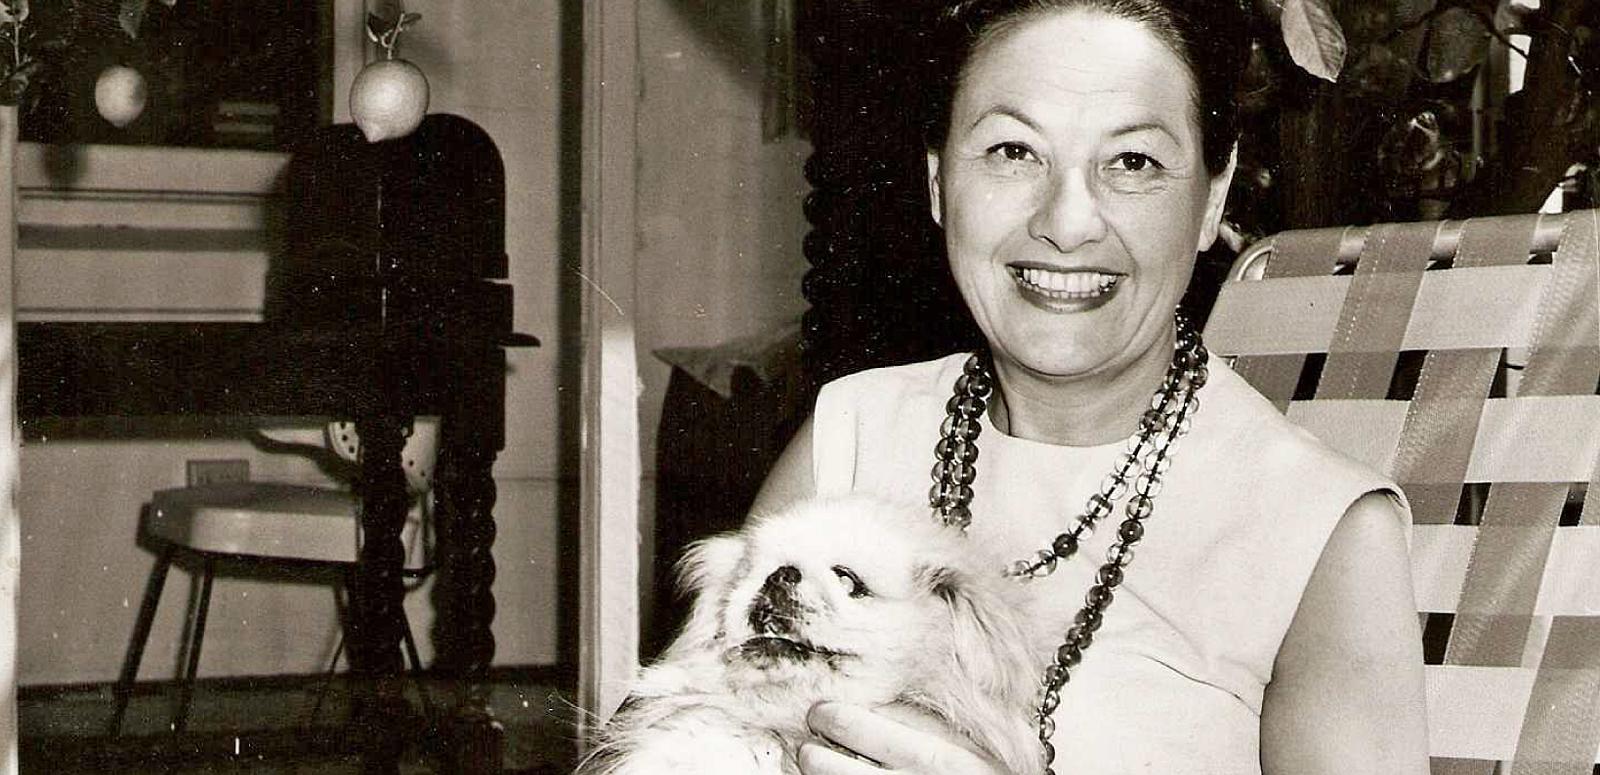 Binny Lum holding her dog, Ming. Circa 1960s.